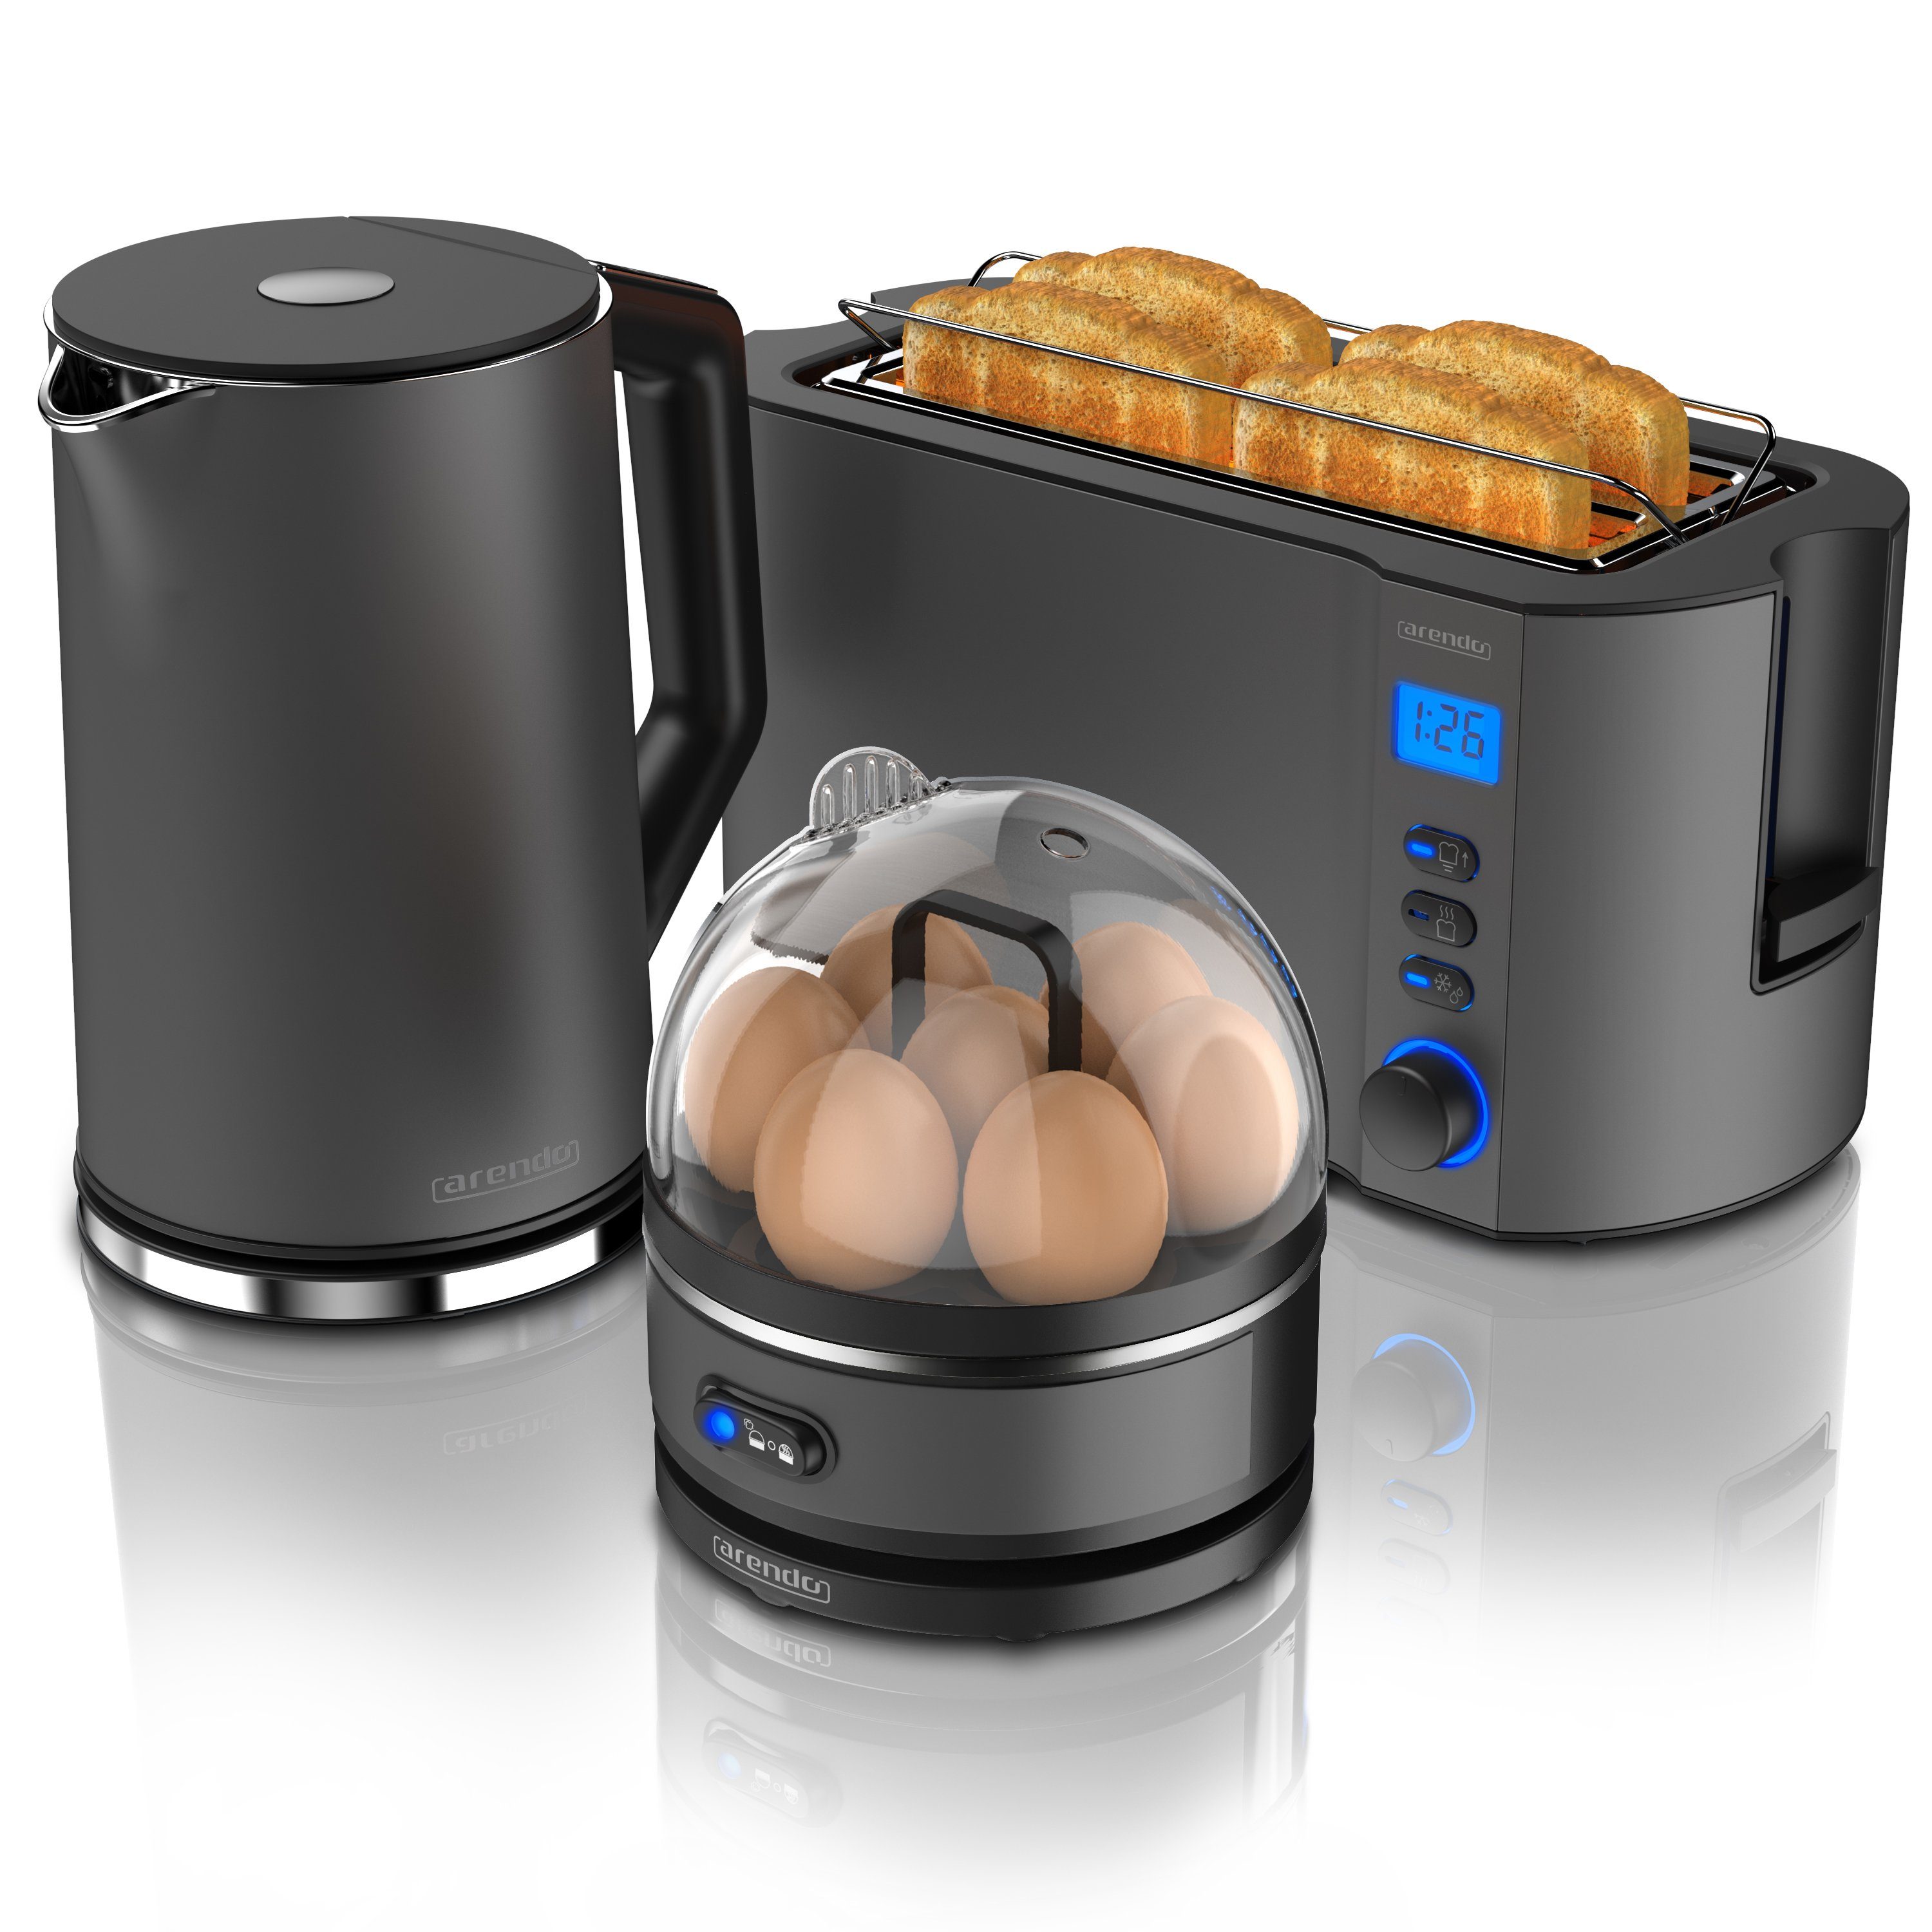 Arendo Frühstücks-Set (3-tlg), Wasserkocher 1,5l, 4-Scheiben Toaster, 7er Eierkocher, Grau | Frühstückssets